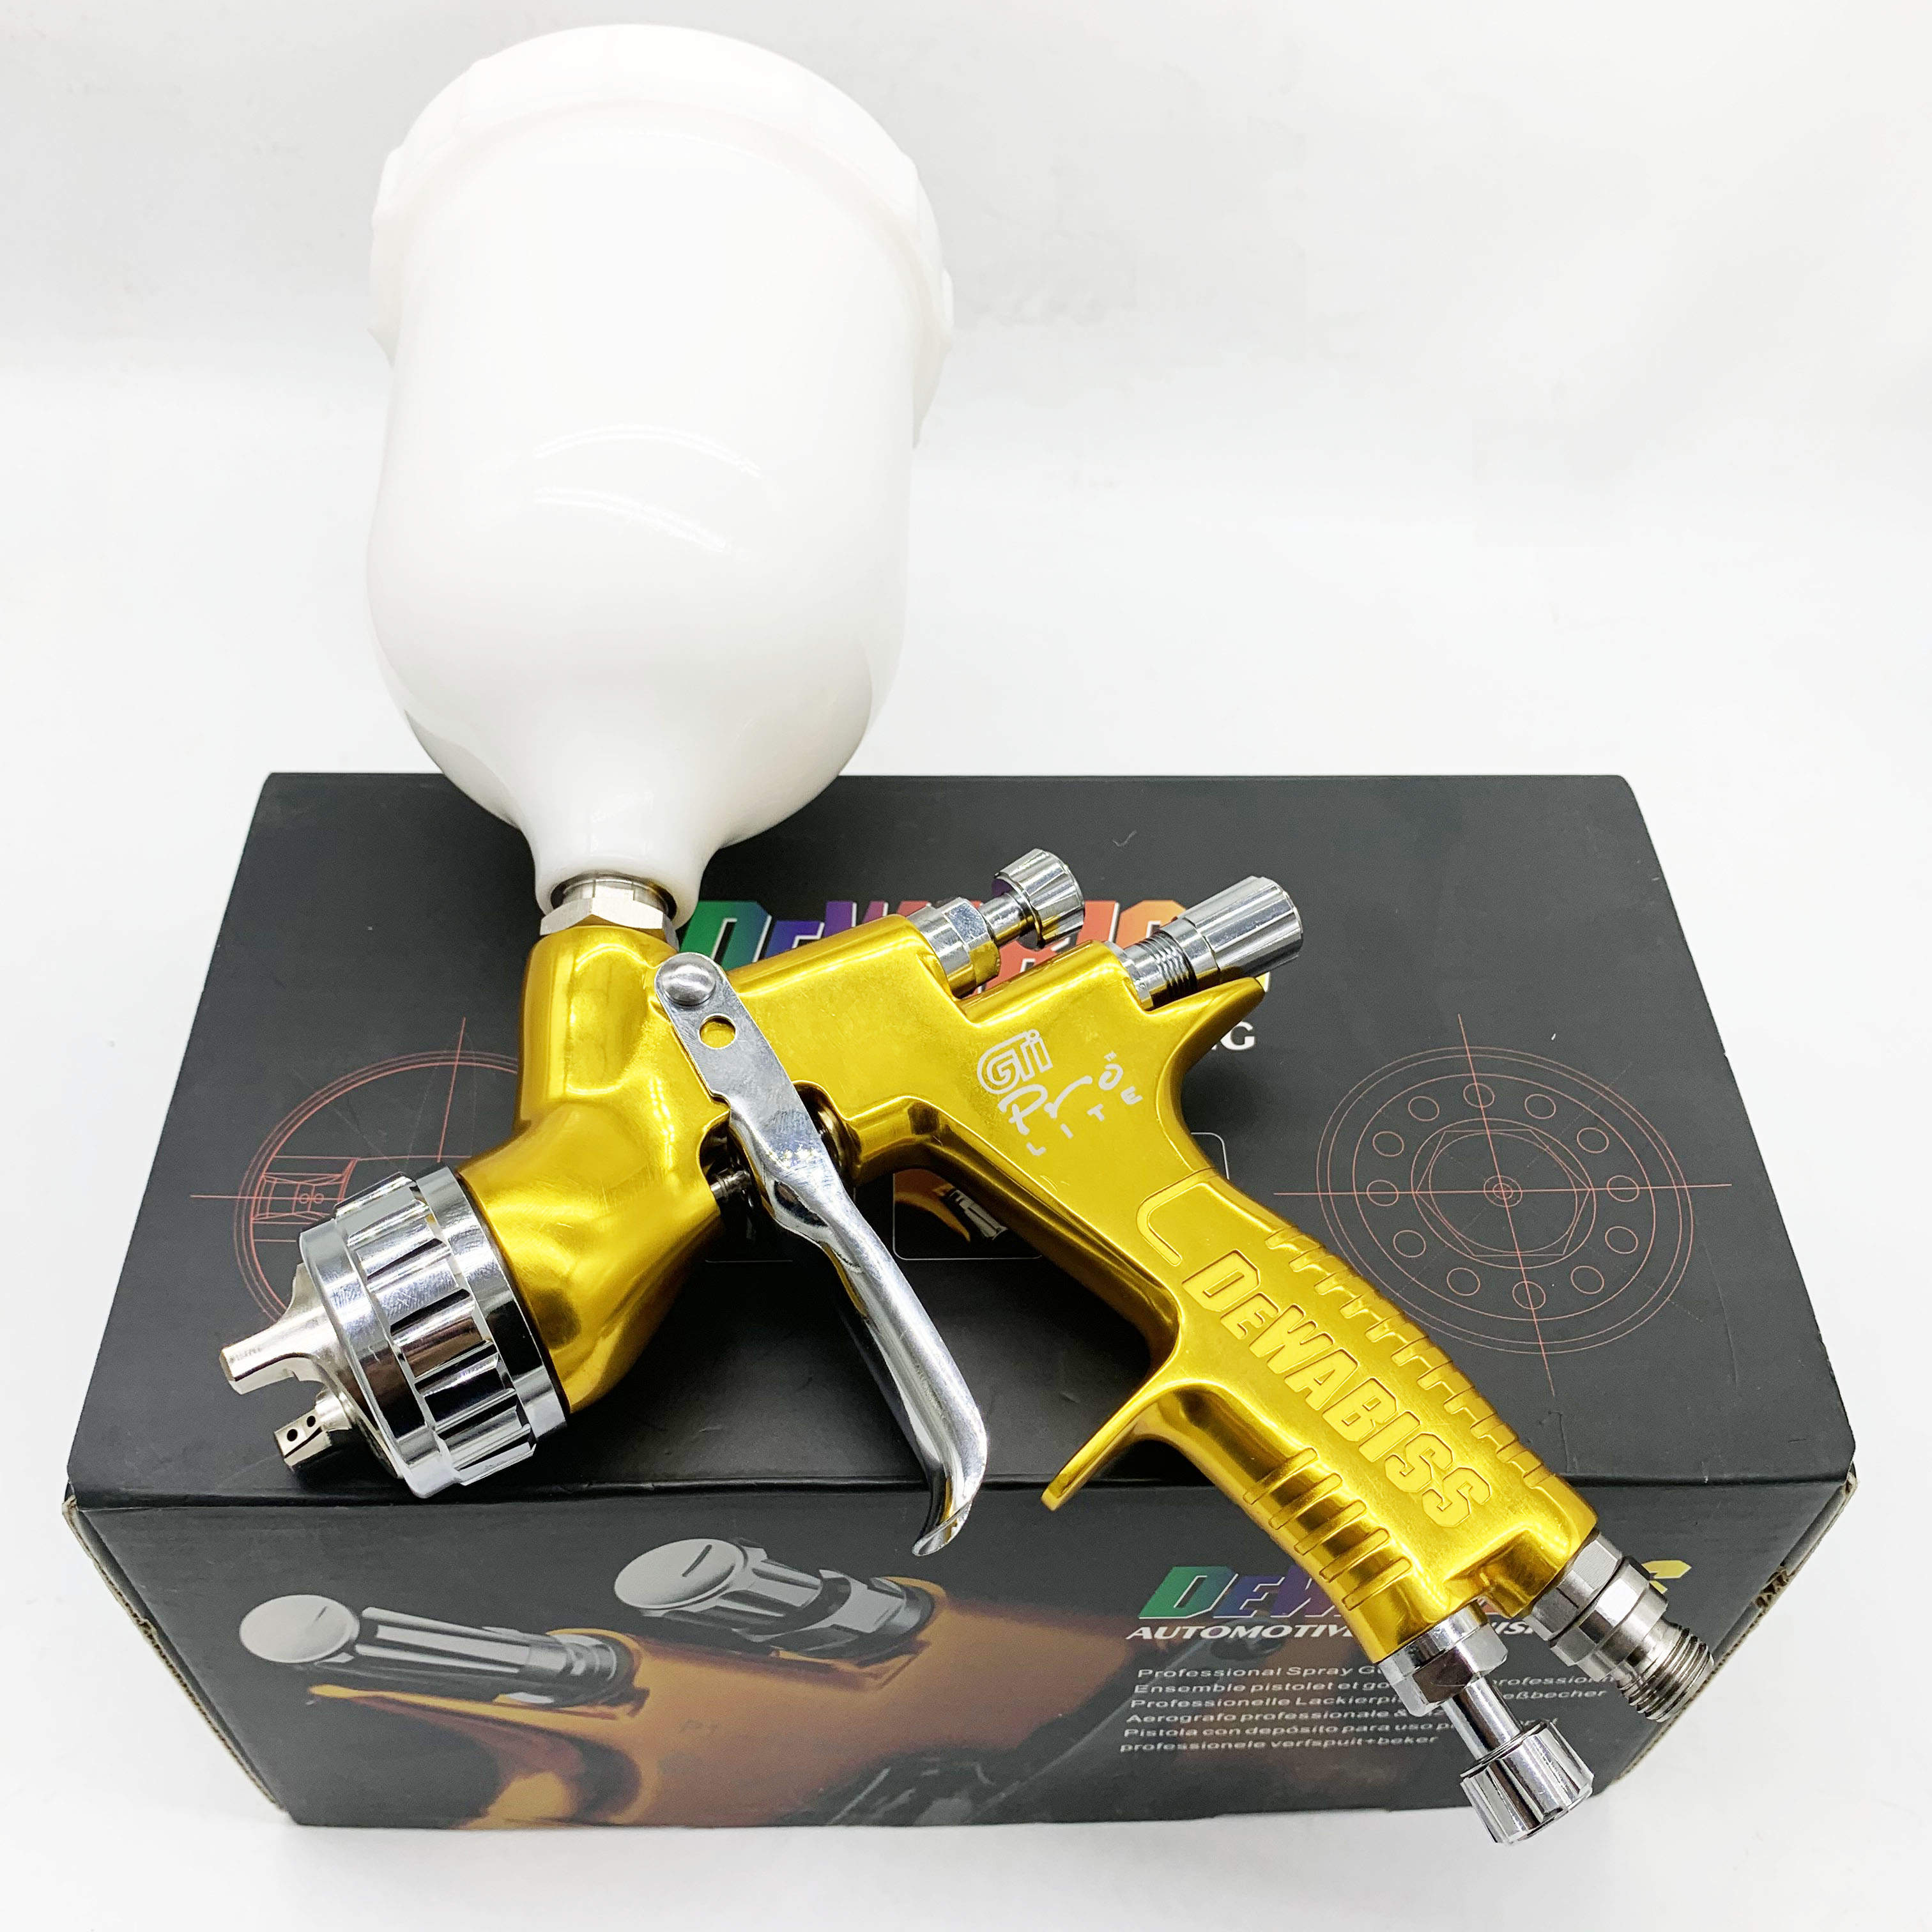 

dewabiss spray paint gun GTI pro TE20/T110 Airbrush airless sprayer for painting cars